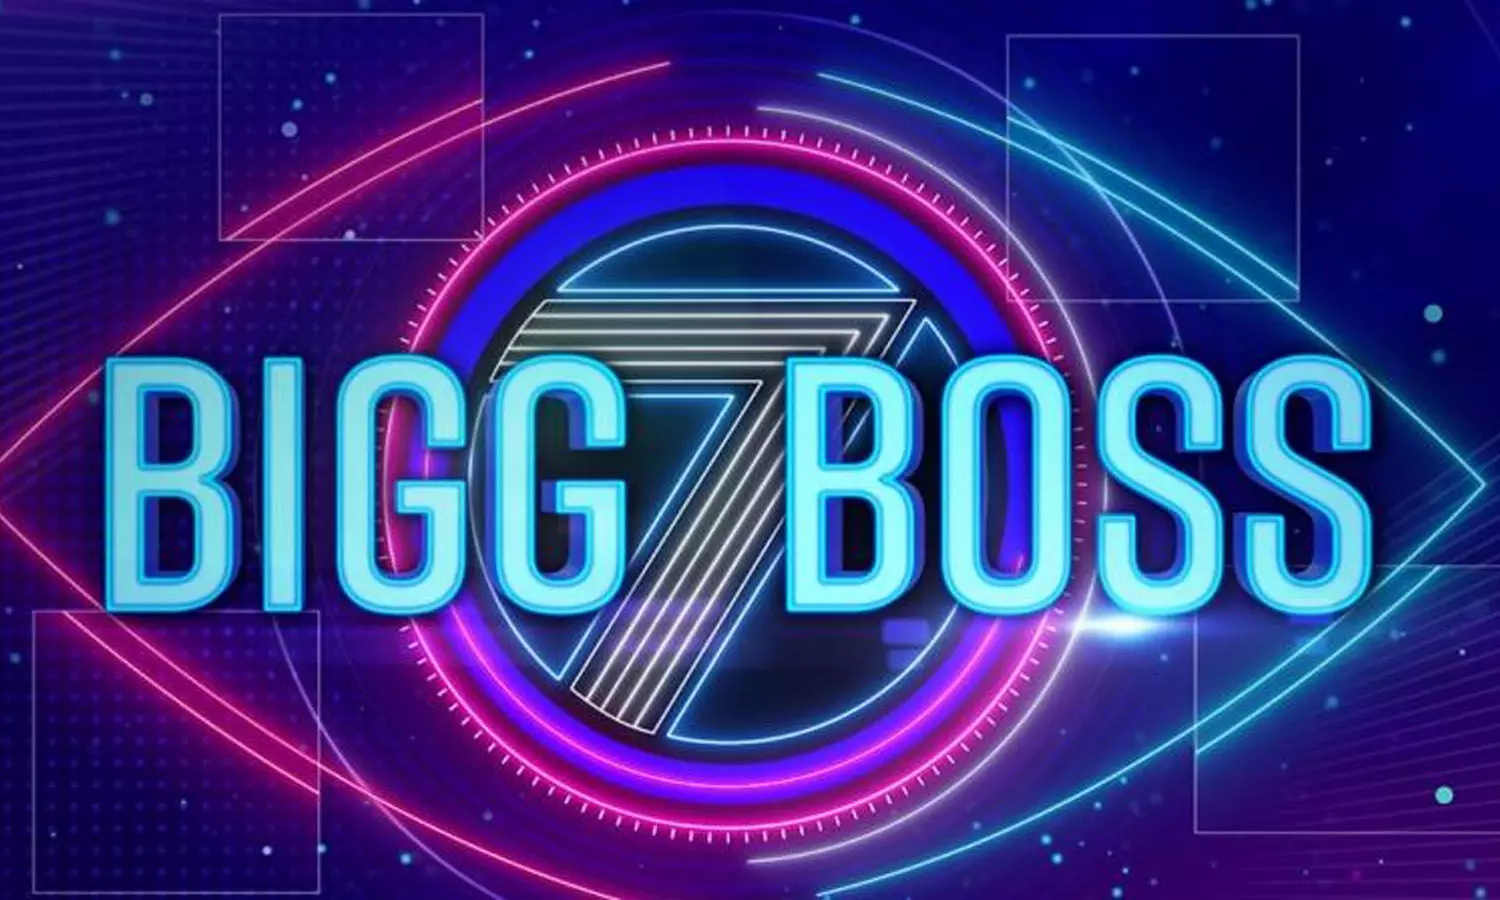 Bigg Boss Telugu S7: Contestants, Streaming Partners, Time & More